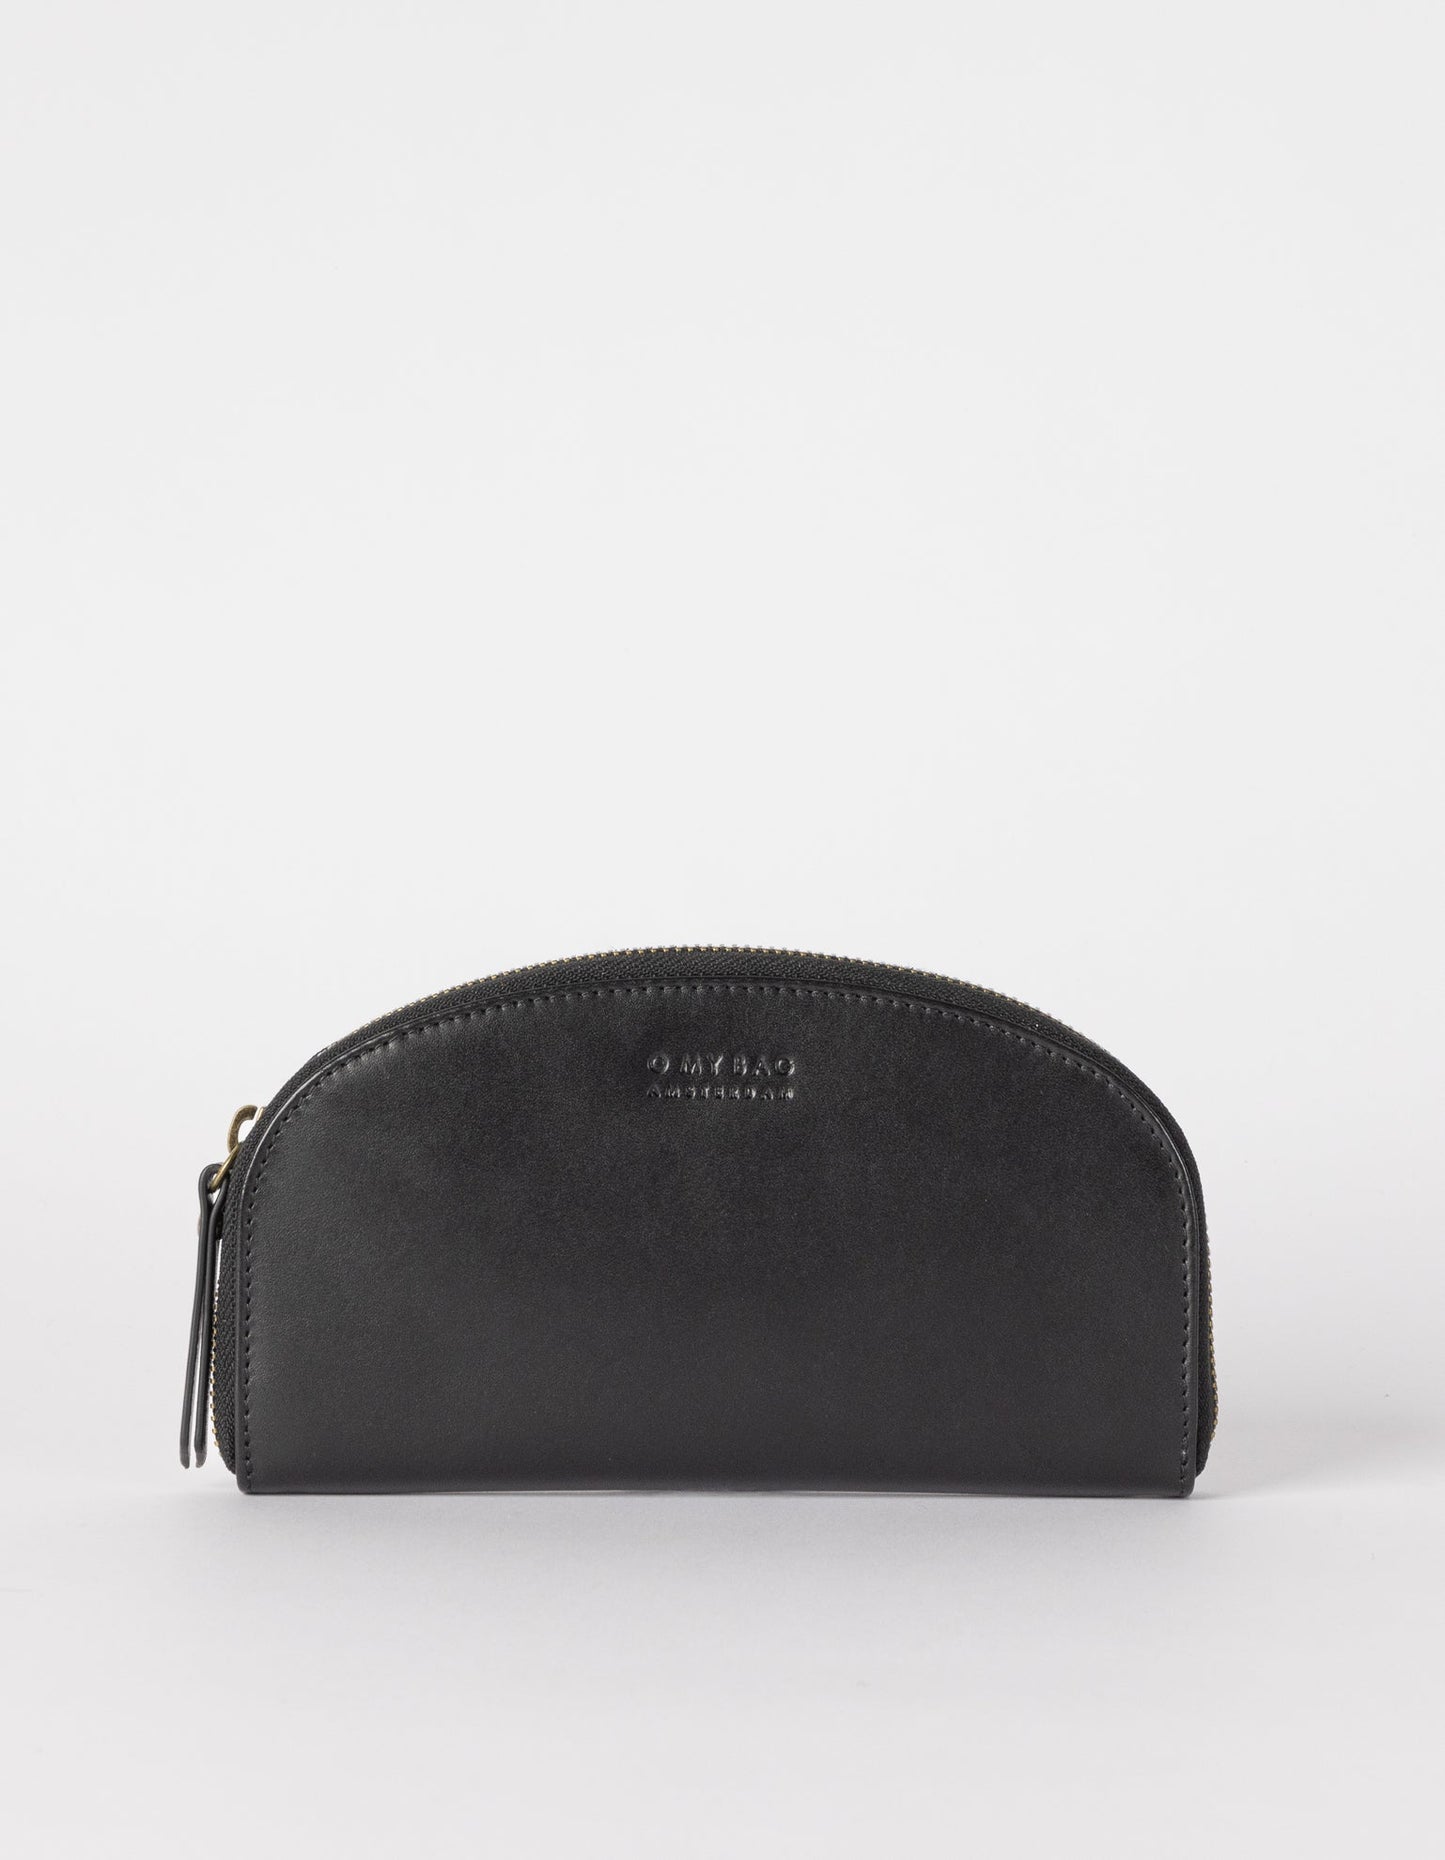 omybag - Blake Wallet Black Classic Leather